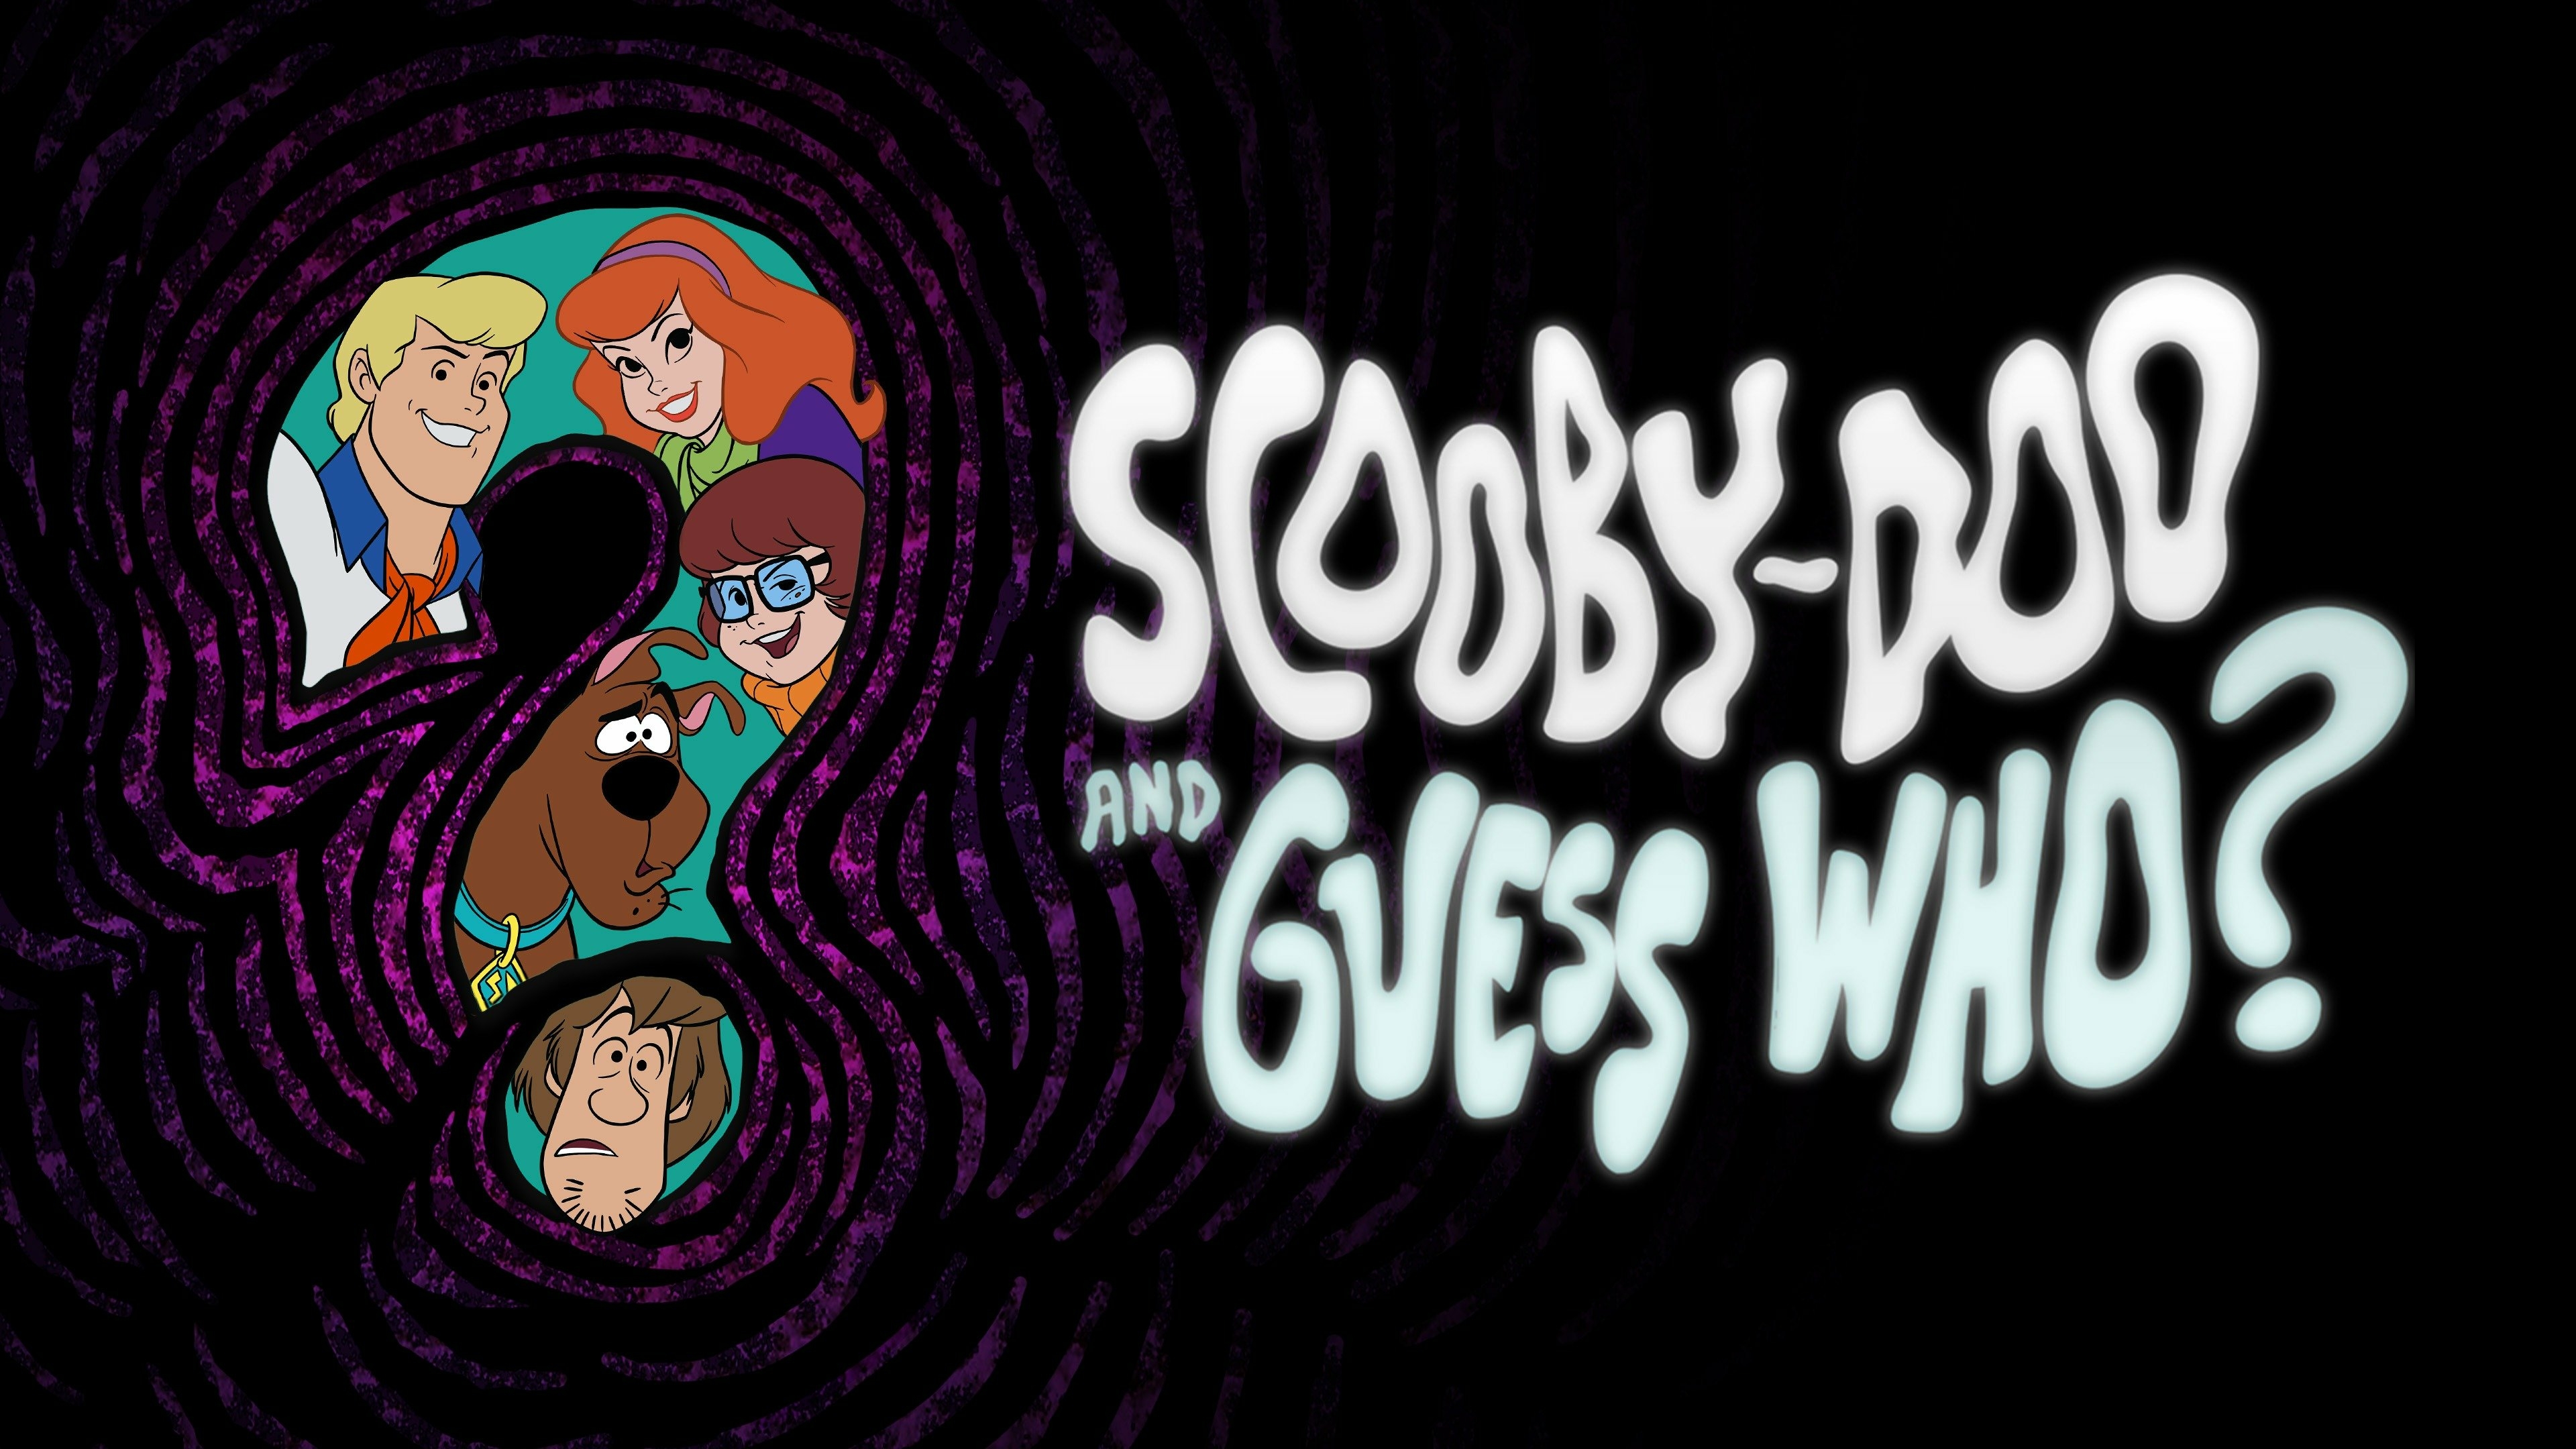 ArtStation - Scooby-Doo: Shaggy ultra instict